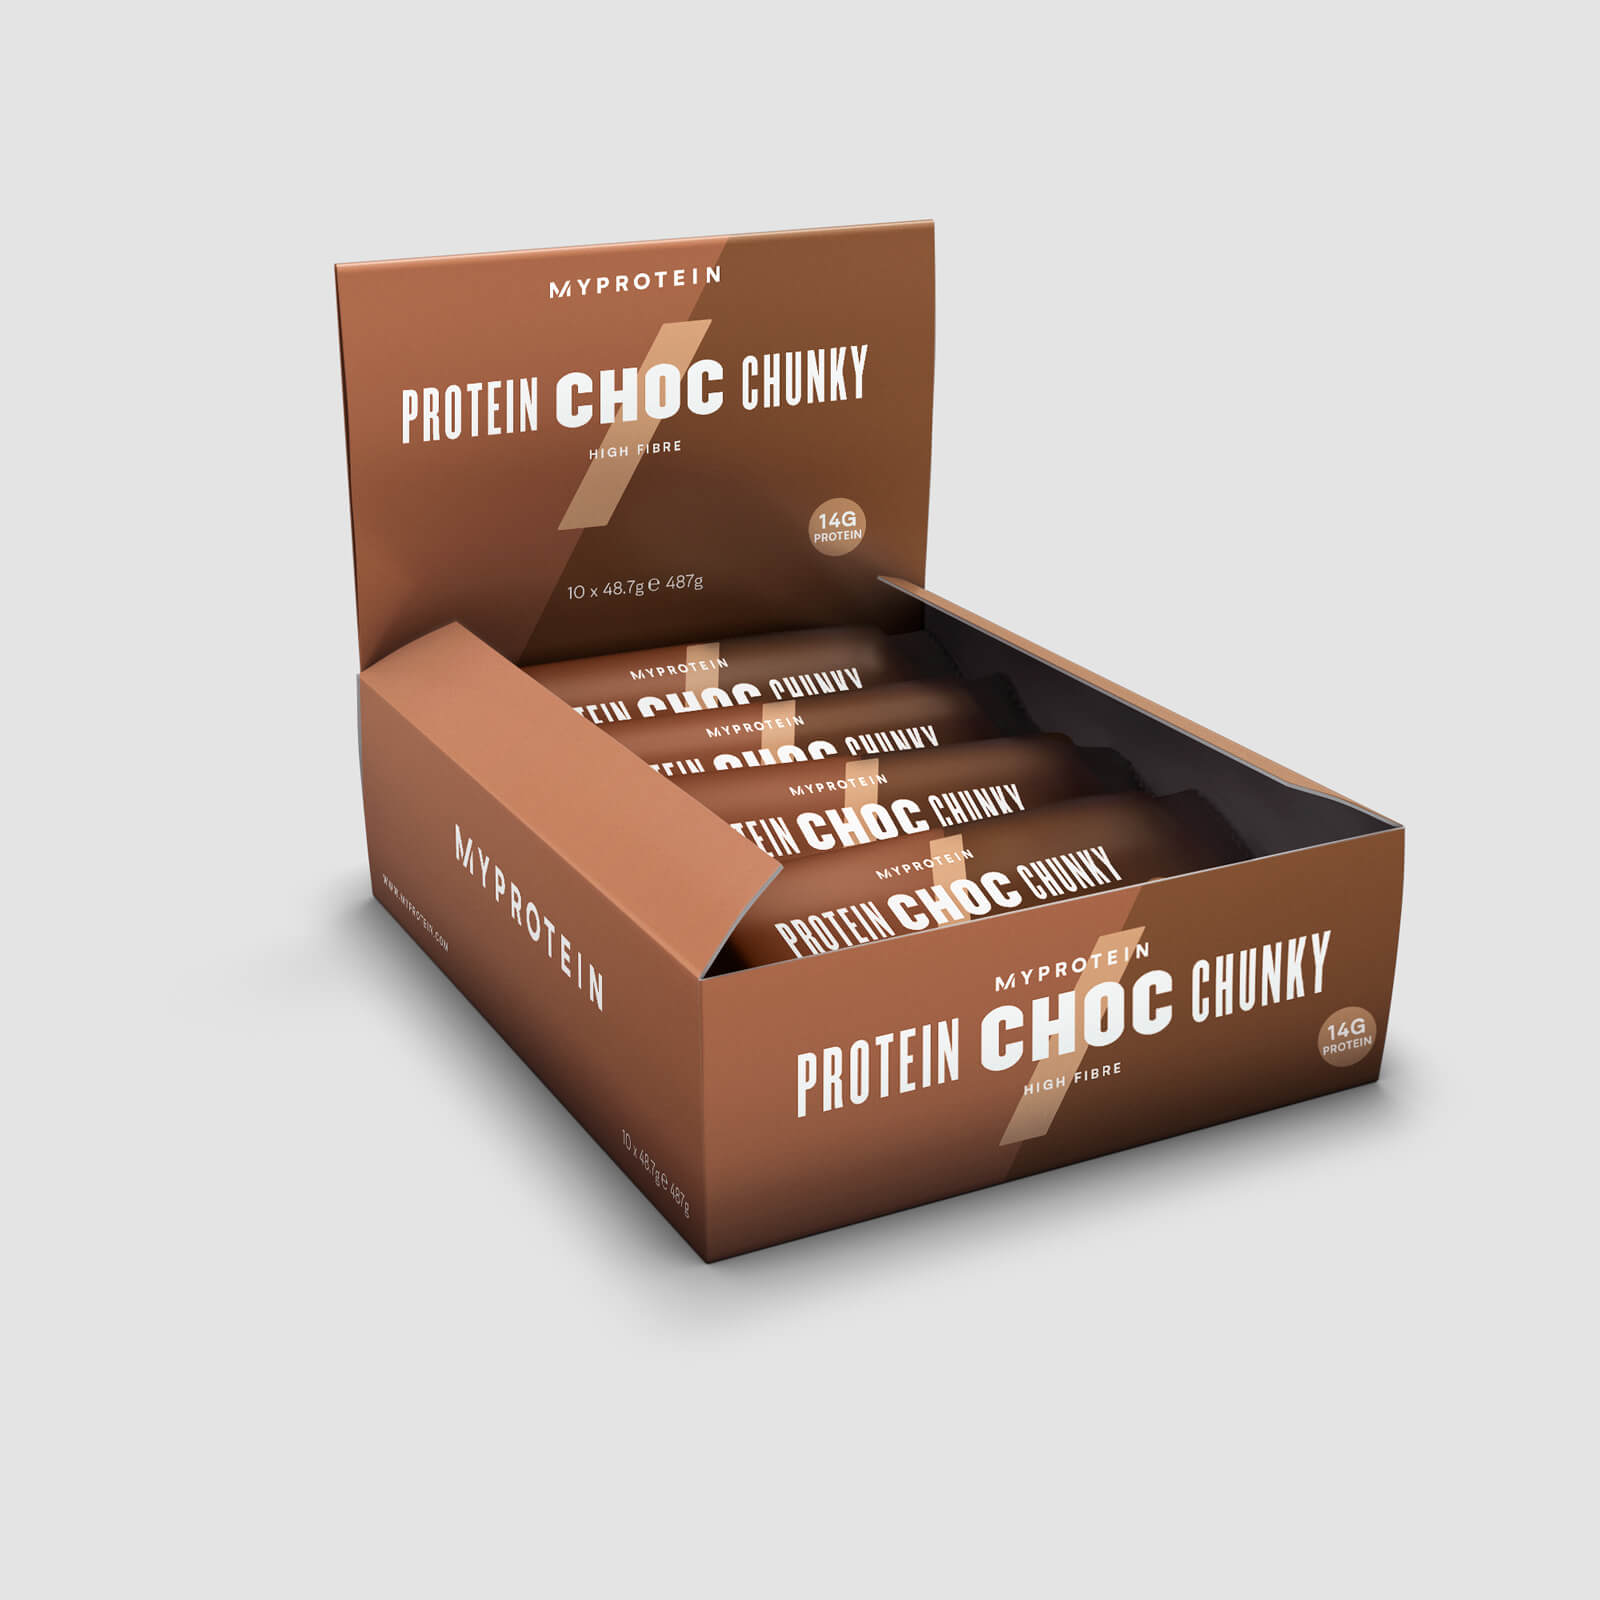 Myprotein Protein Choc Chunky - 10 x 48.7g - Doos - Chocolate